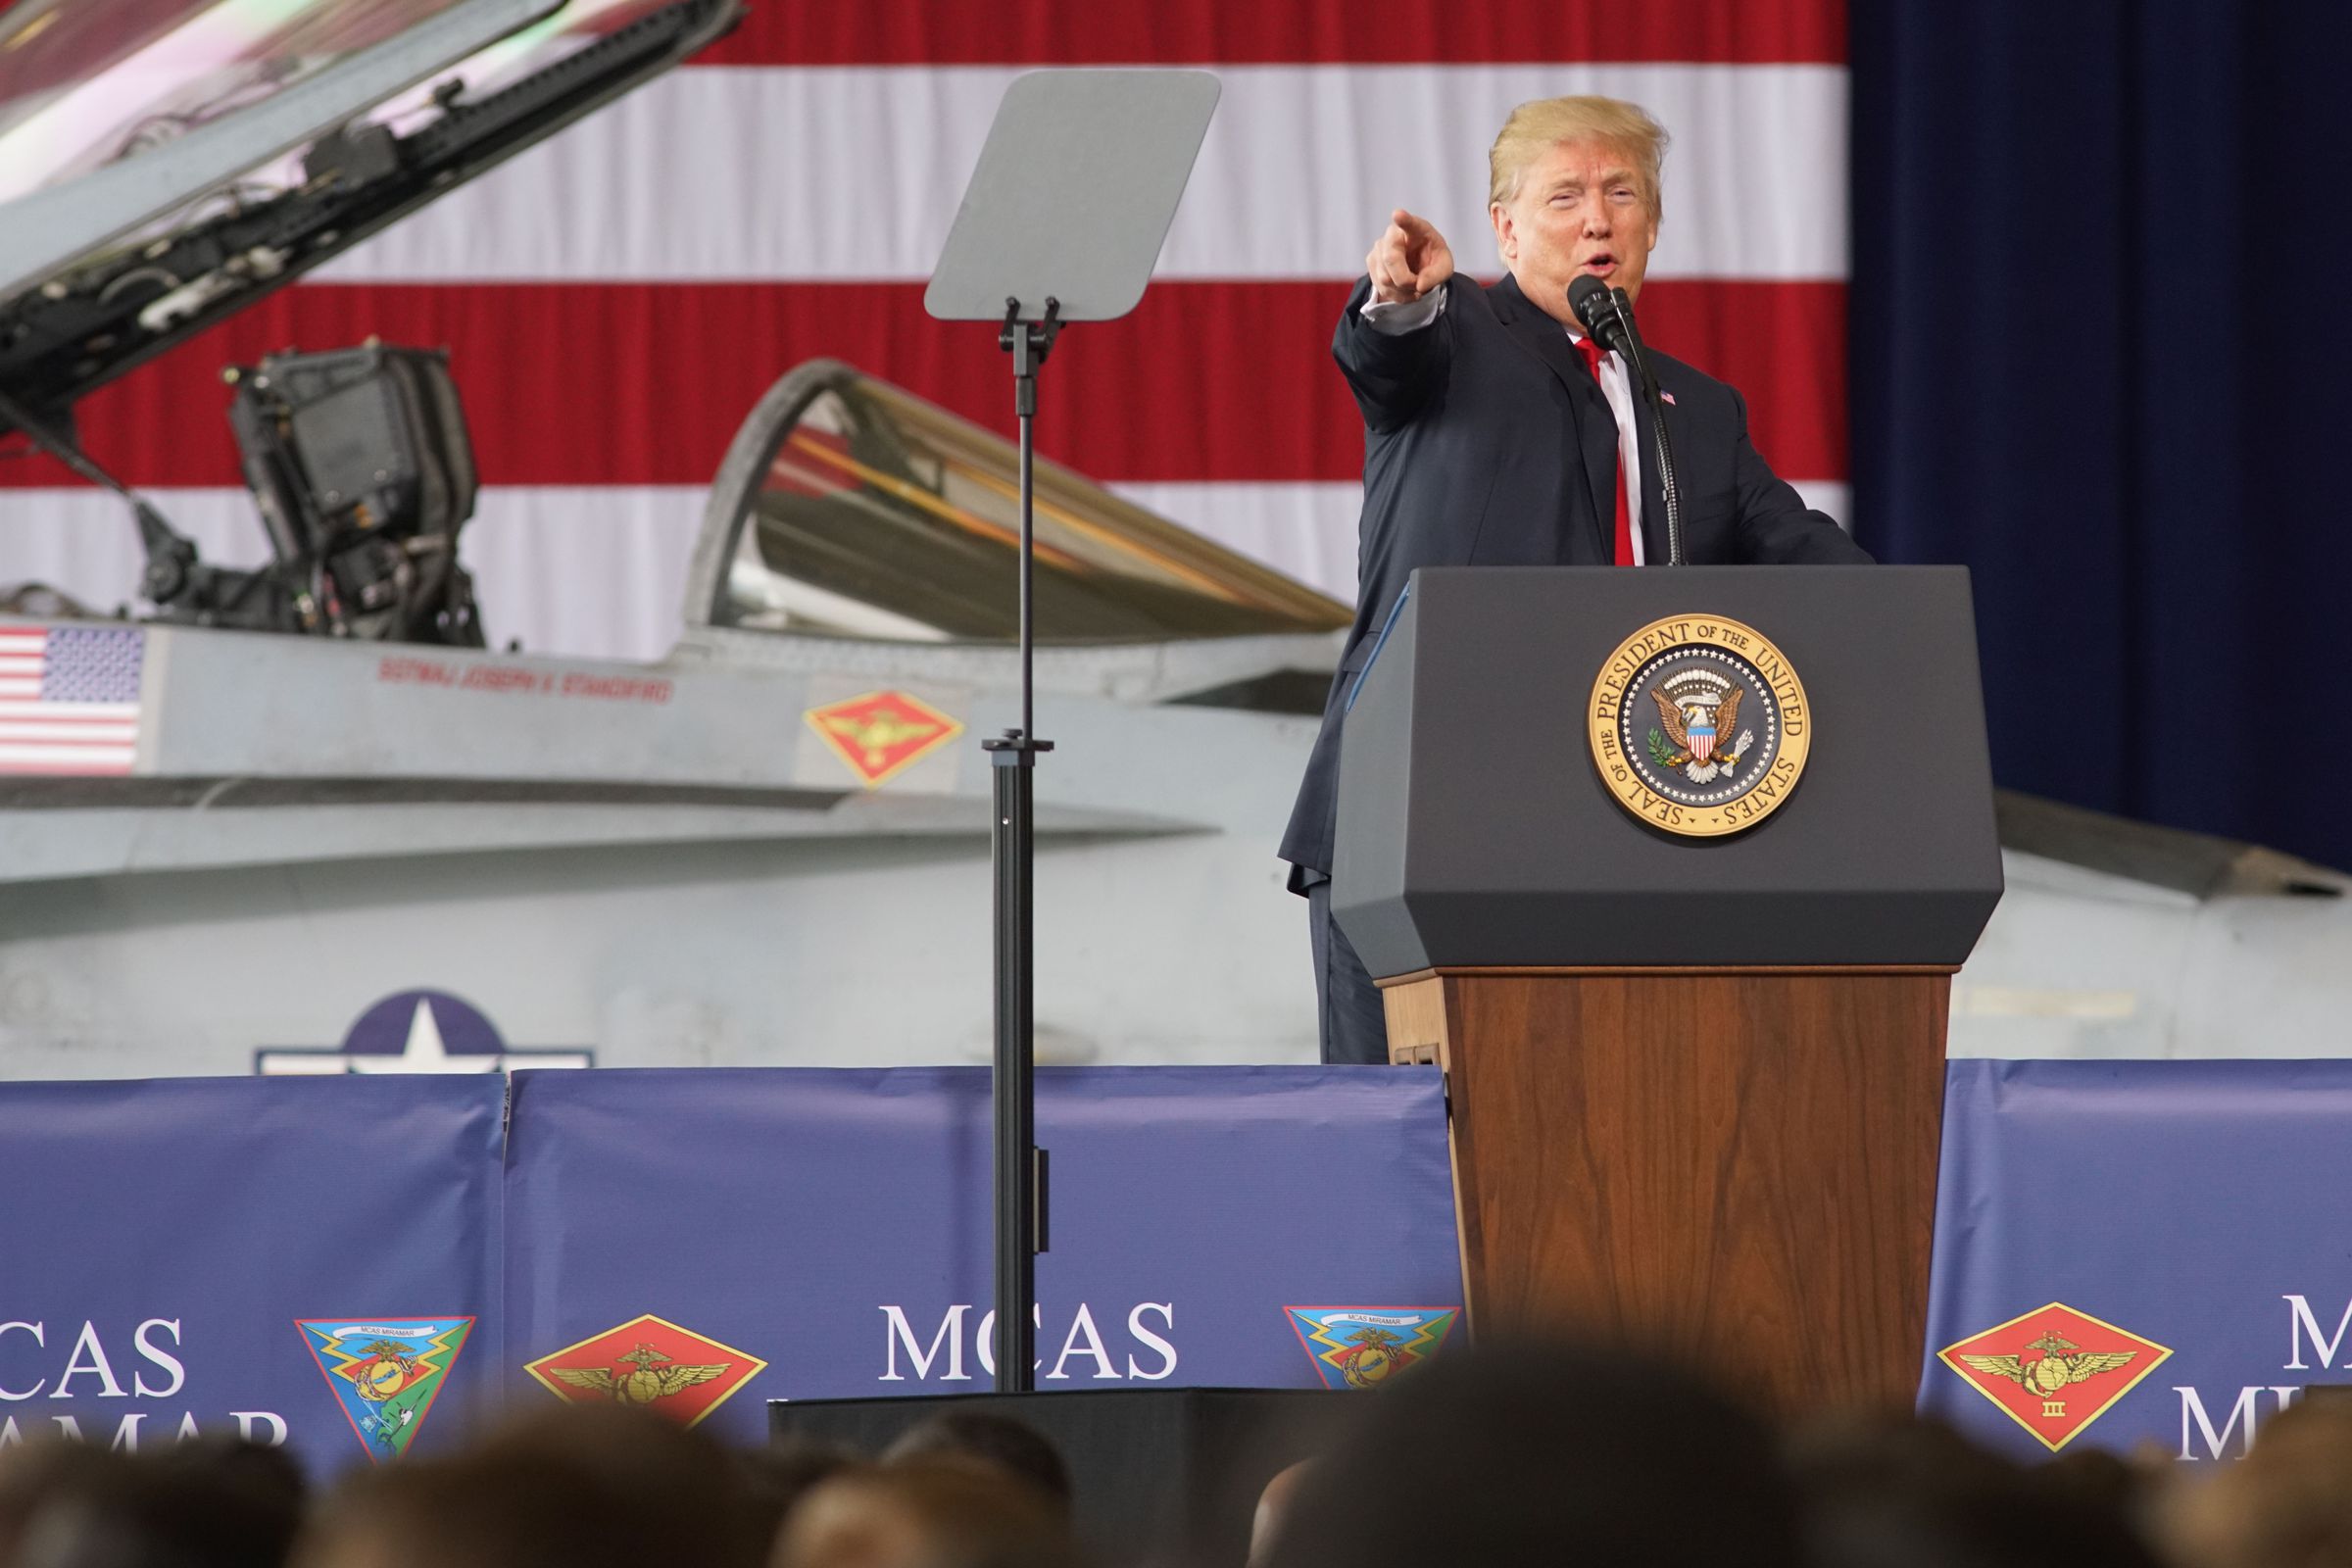 Trump Addresses Troops At Marine Corps Air Station Miramar During CA Visit